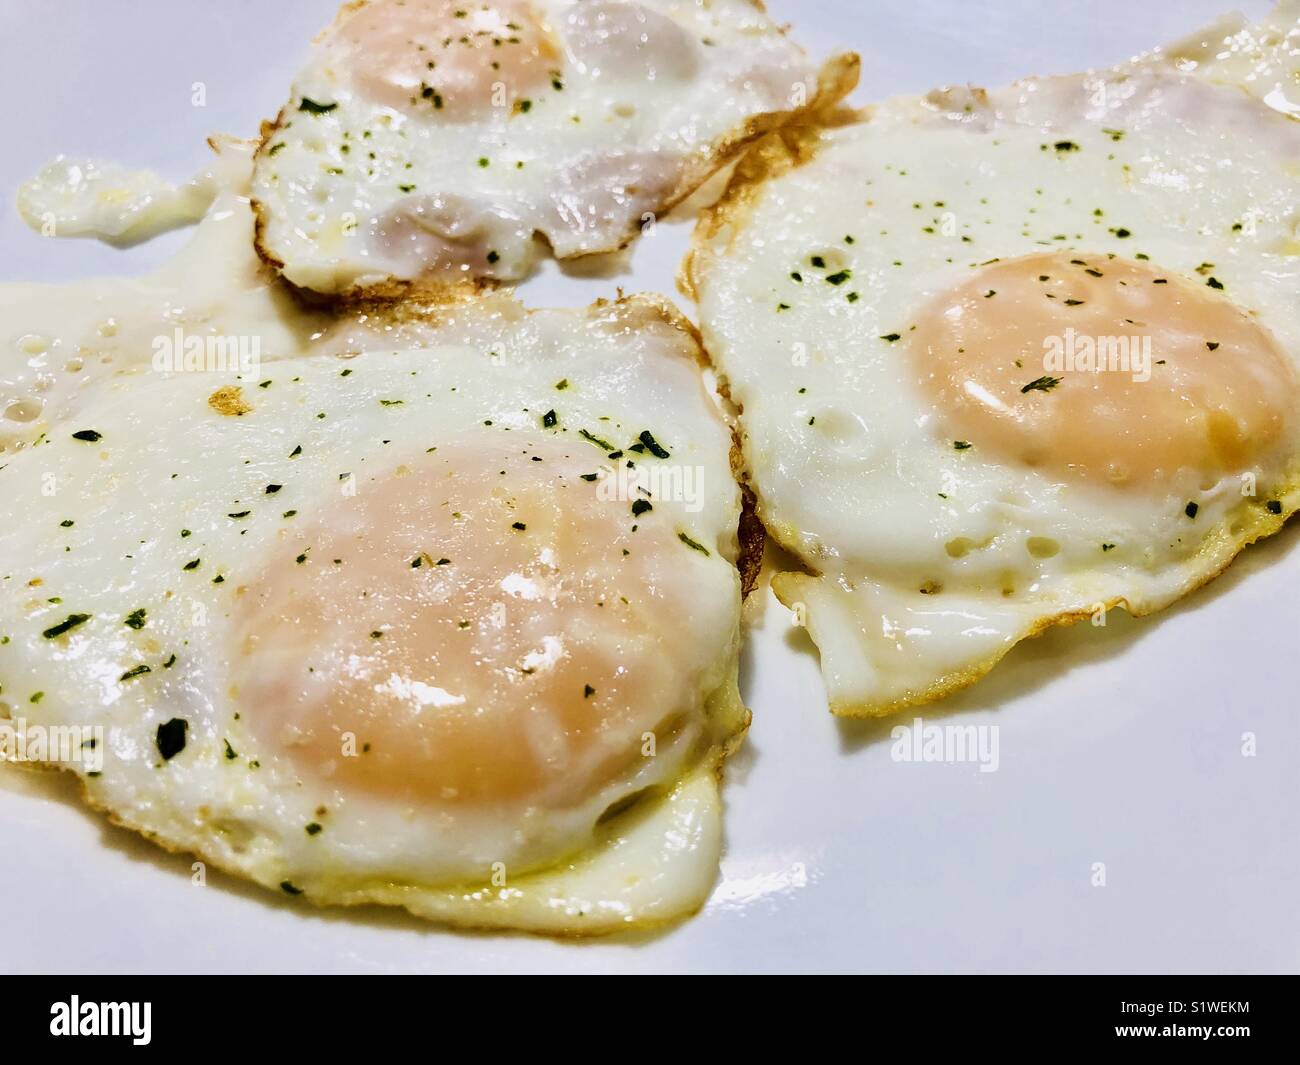 https://c8.alamy.com/comp/S1WEKM/sunny-side-up-eggs-S1WEKM.jpg